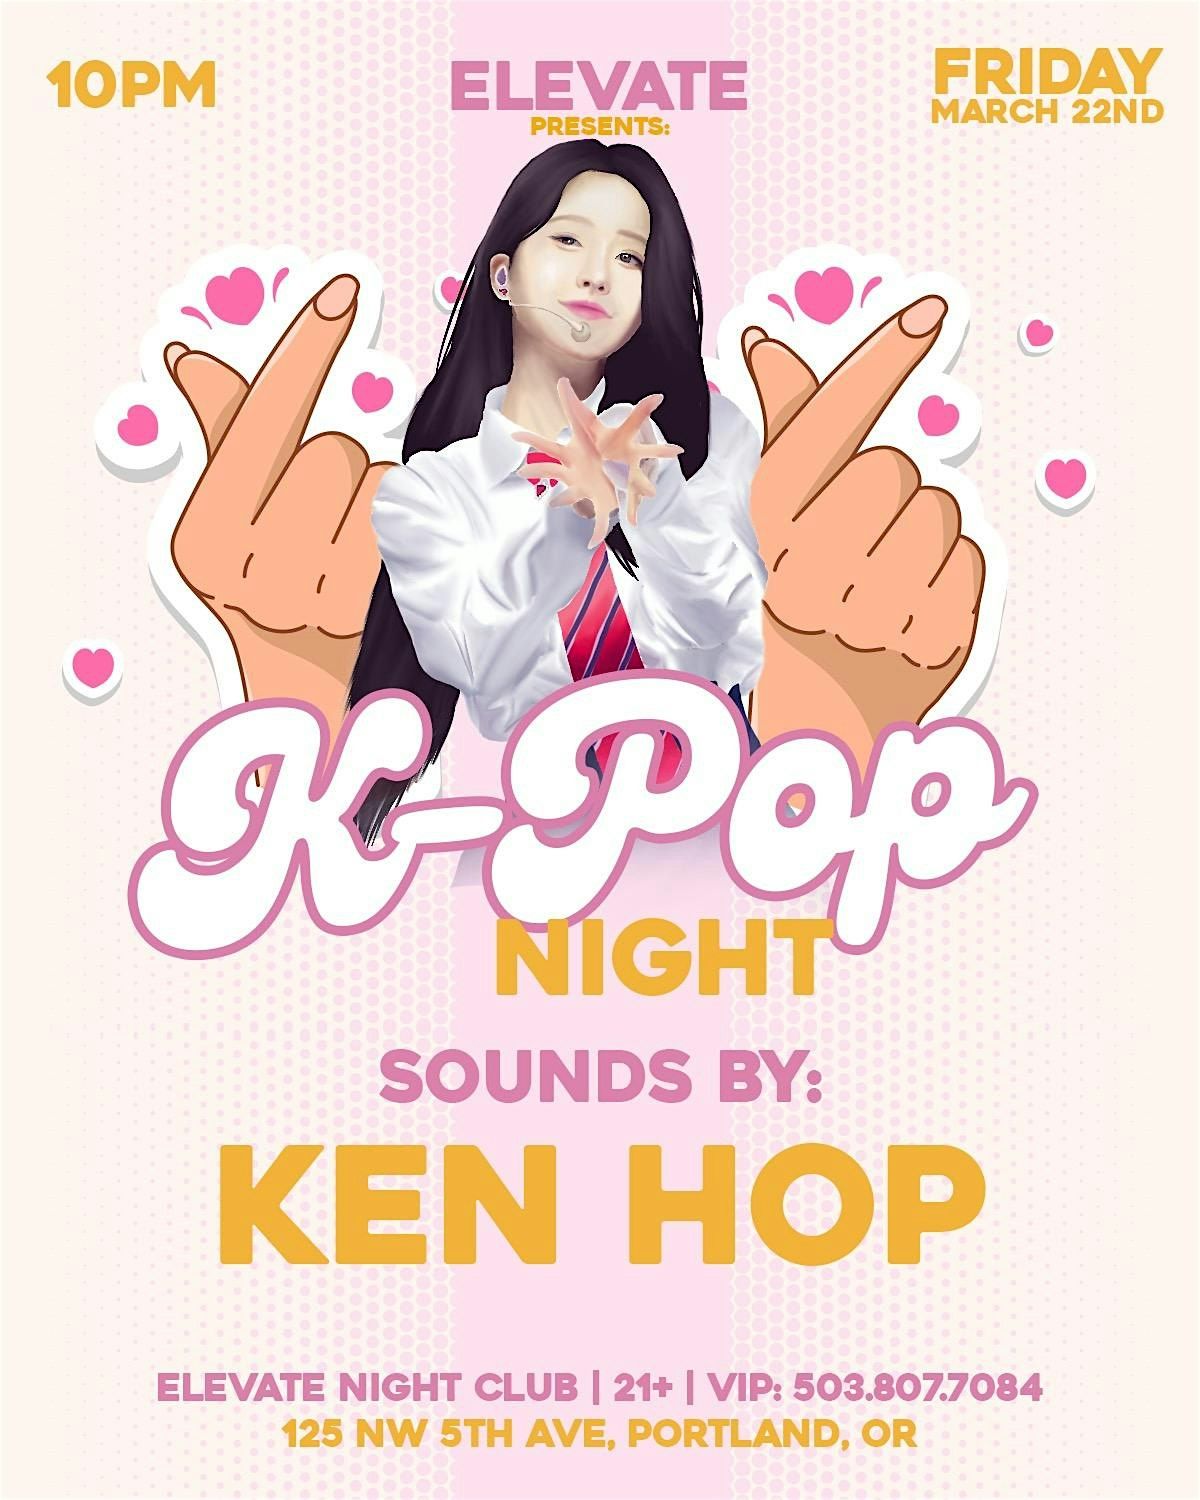 Ken Hop & B.O.B Present KPop Night at Elevate Nightclub